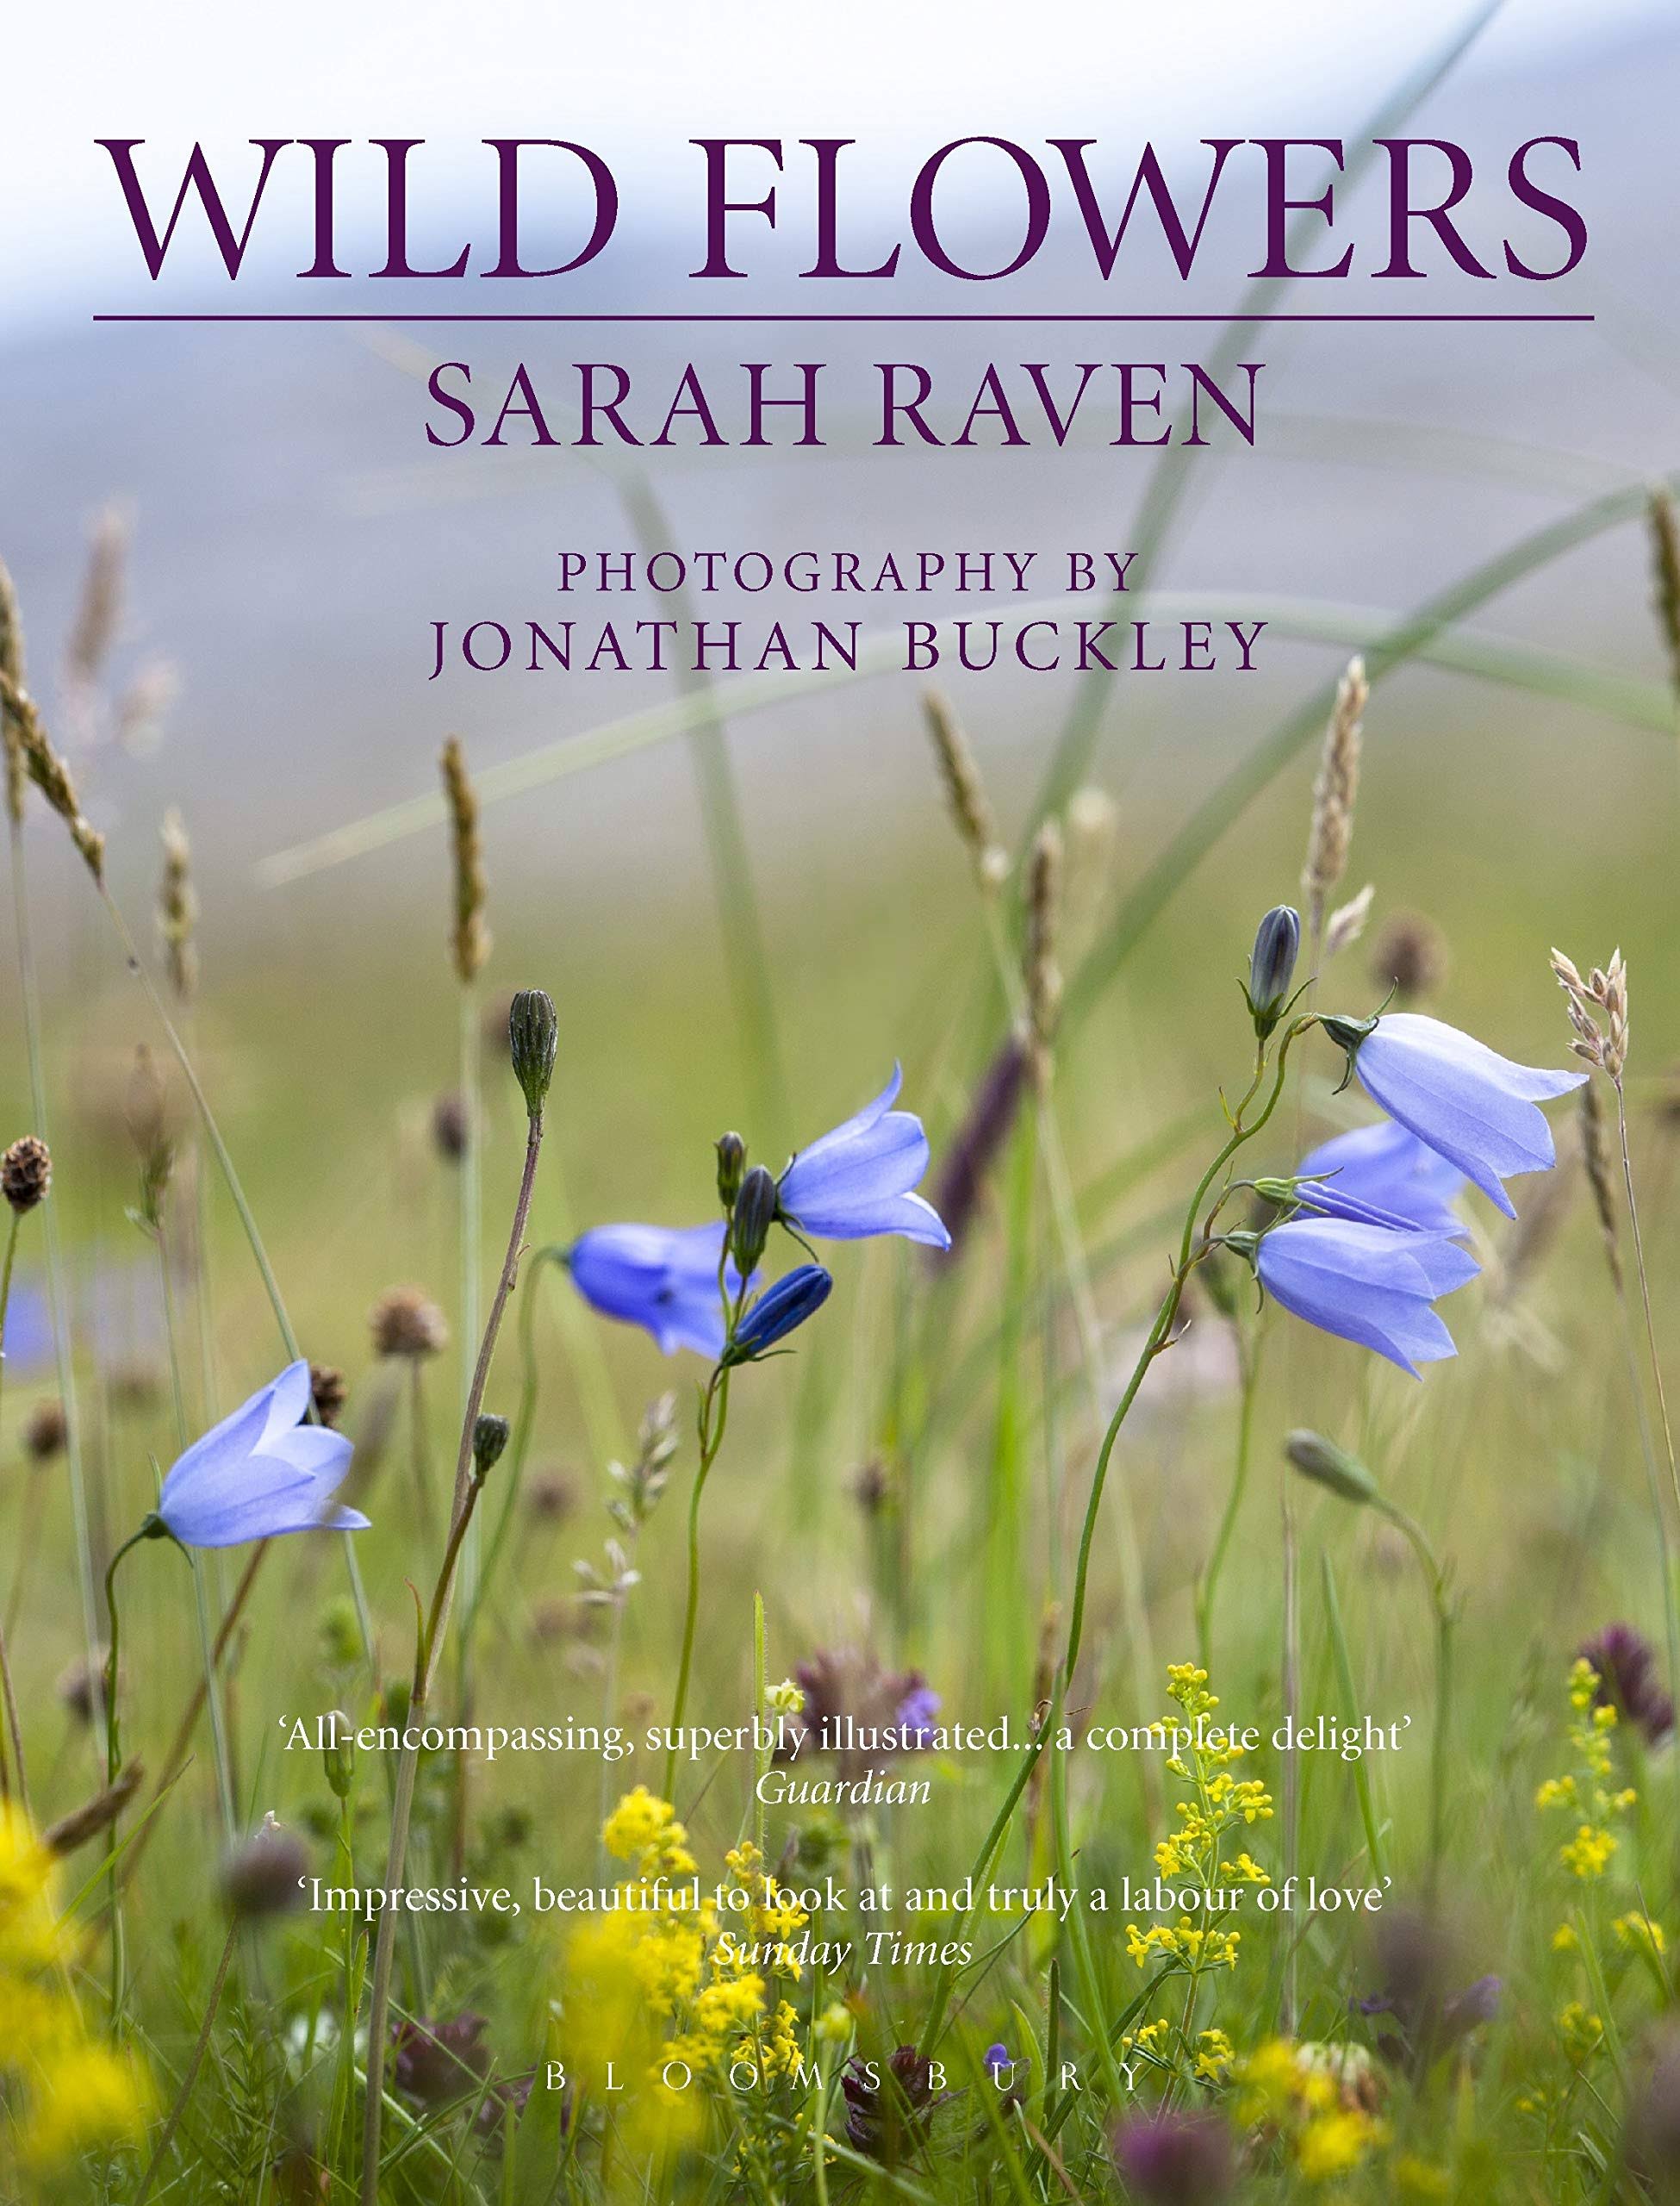 Sarah Raven's Wild Flowers [Book]